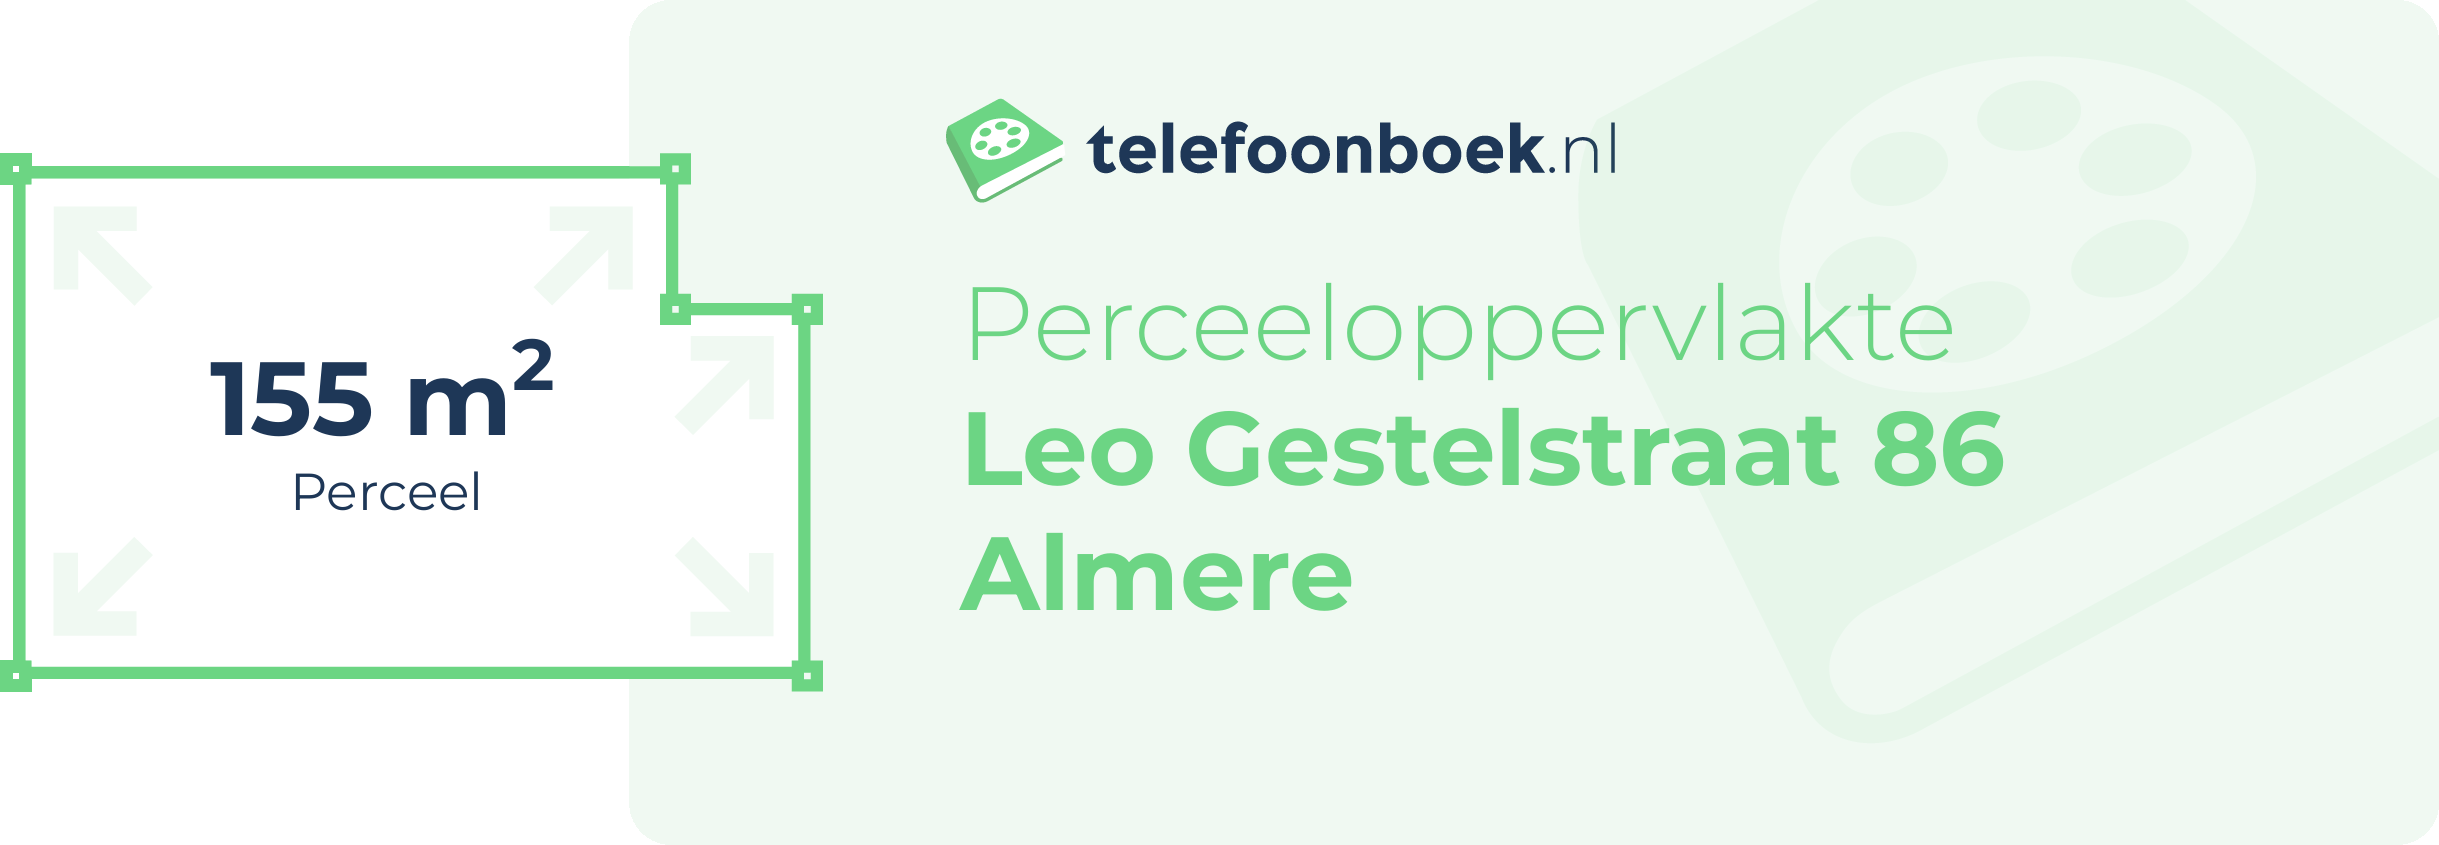 Perceeloppervlakte Leo Gestelstraat 86 Almere